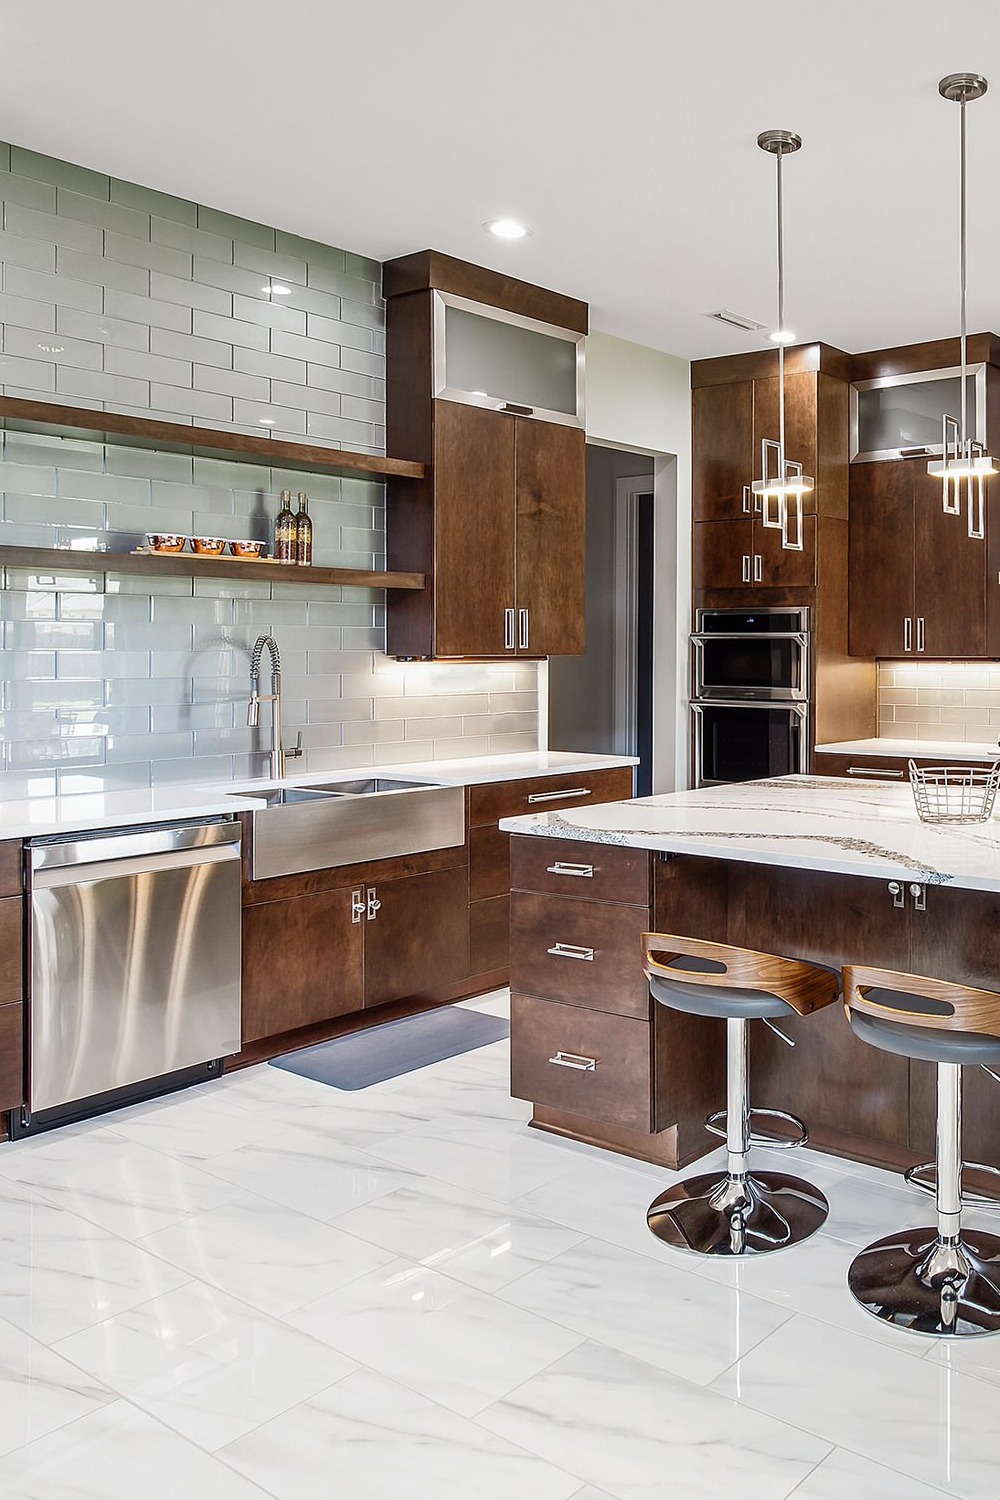 Brown Kitchen Cabinets Brown Tile Backsplash Appliance Finish White Kitchen Design Walls Sink